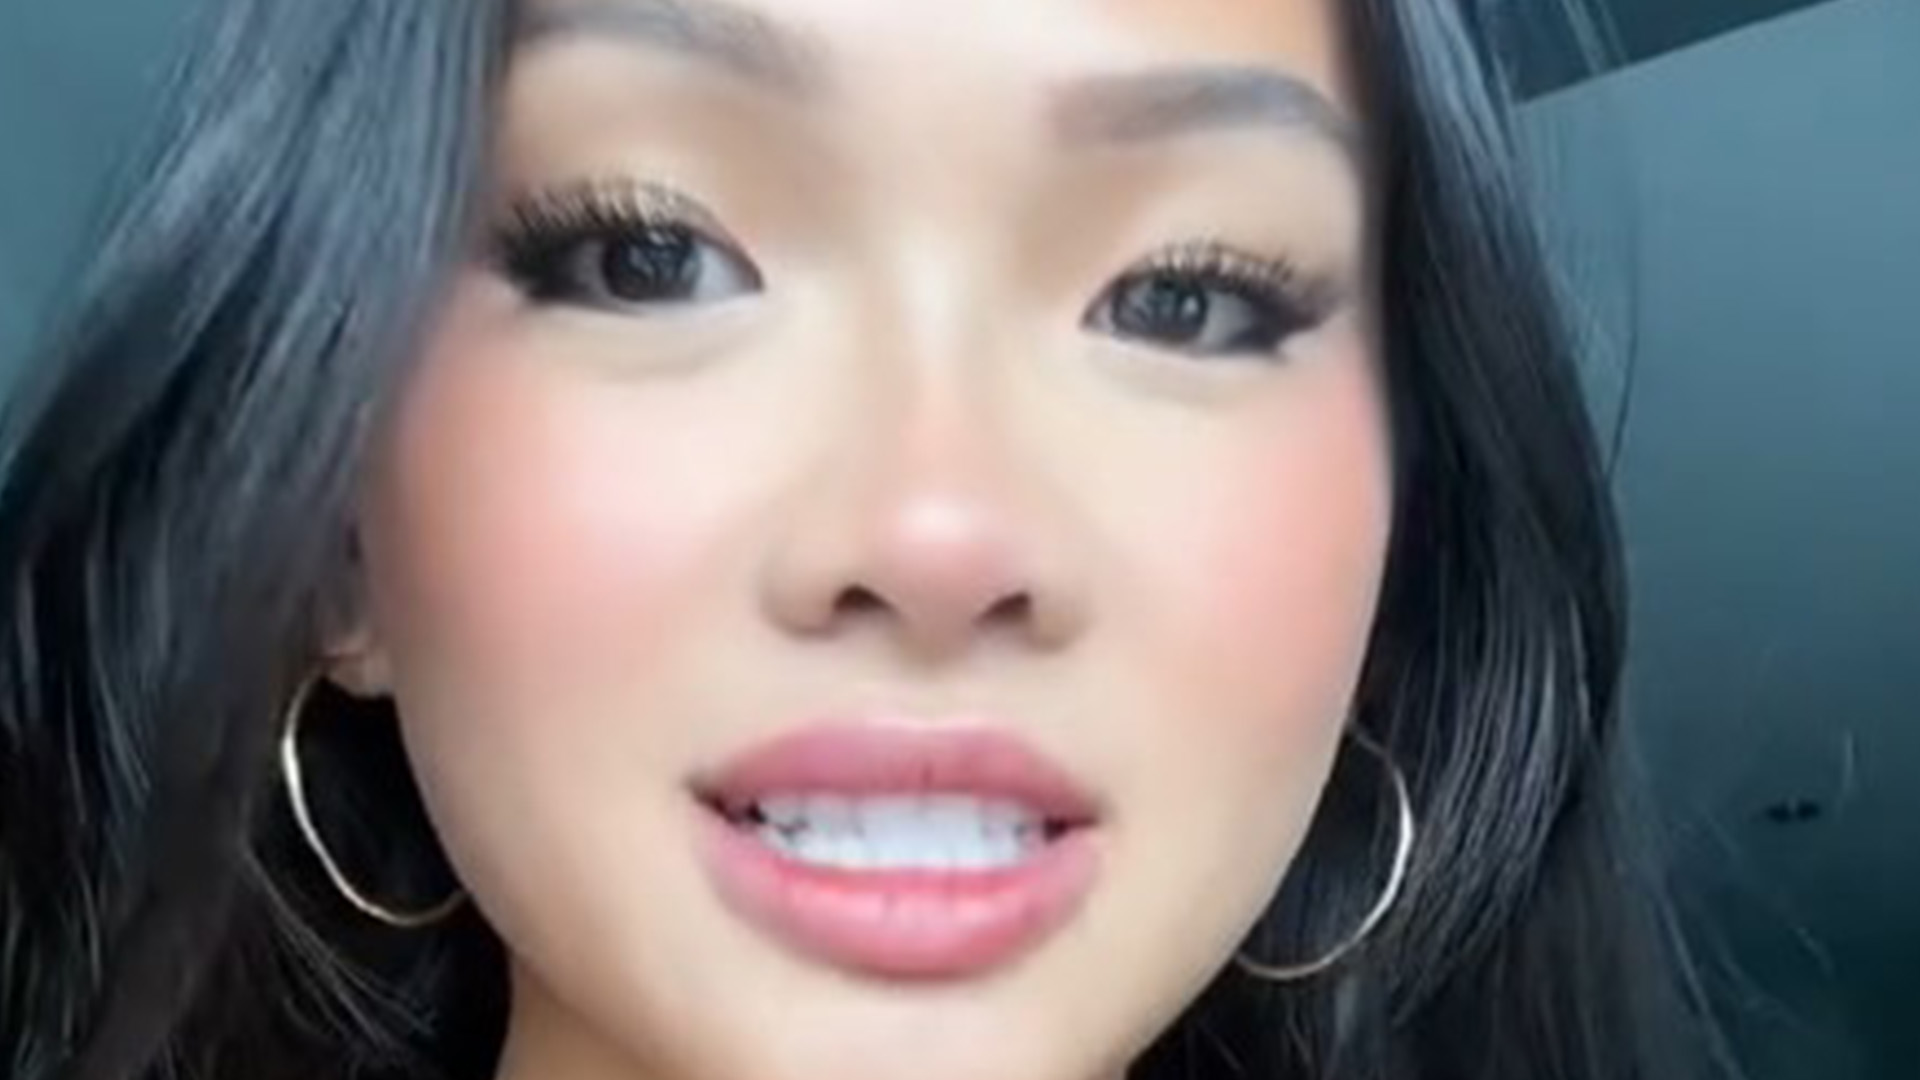 The Bachelorette’s Jenn Tran admits to plastic surgery procedure ahead of season premiere as star shares final result [Video]